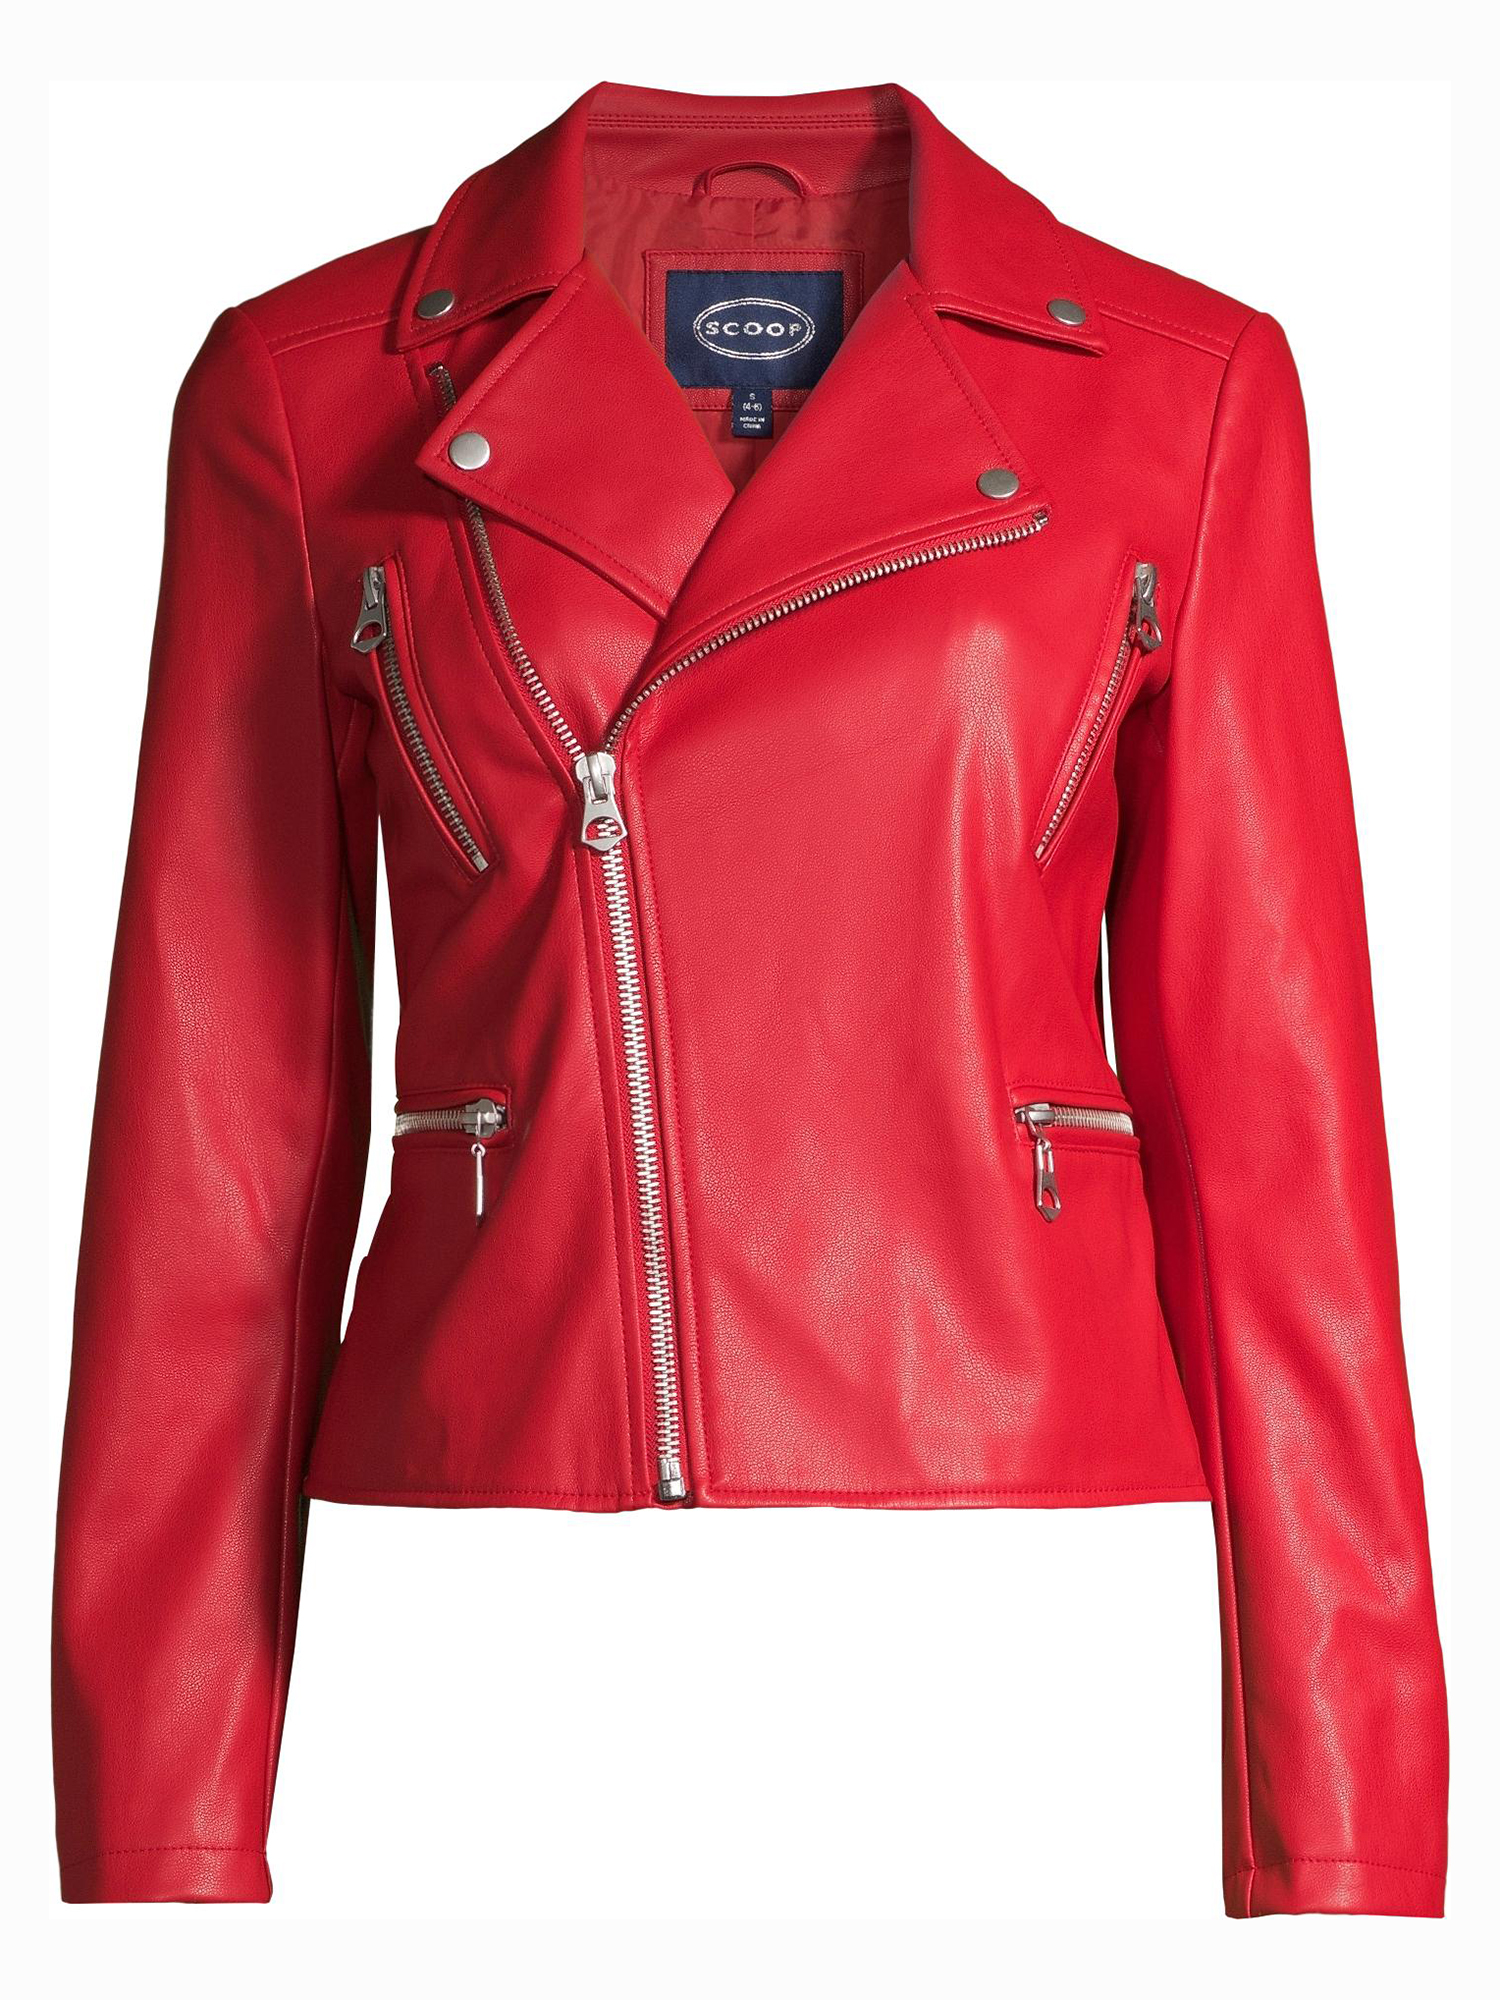 Scoop Women's Faux Leather Moto Jacket - image 5 of 6